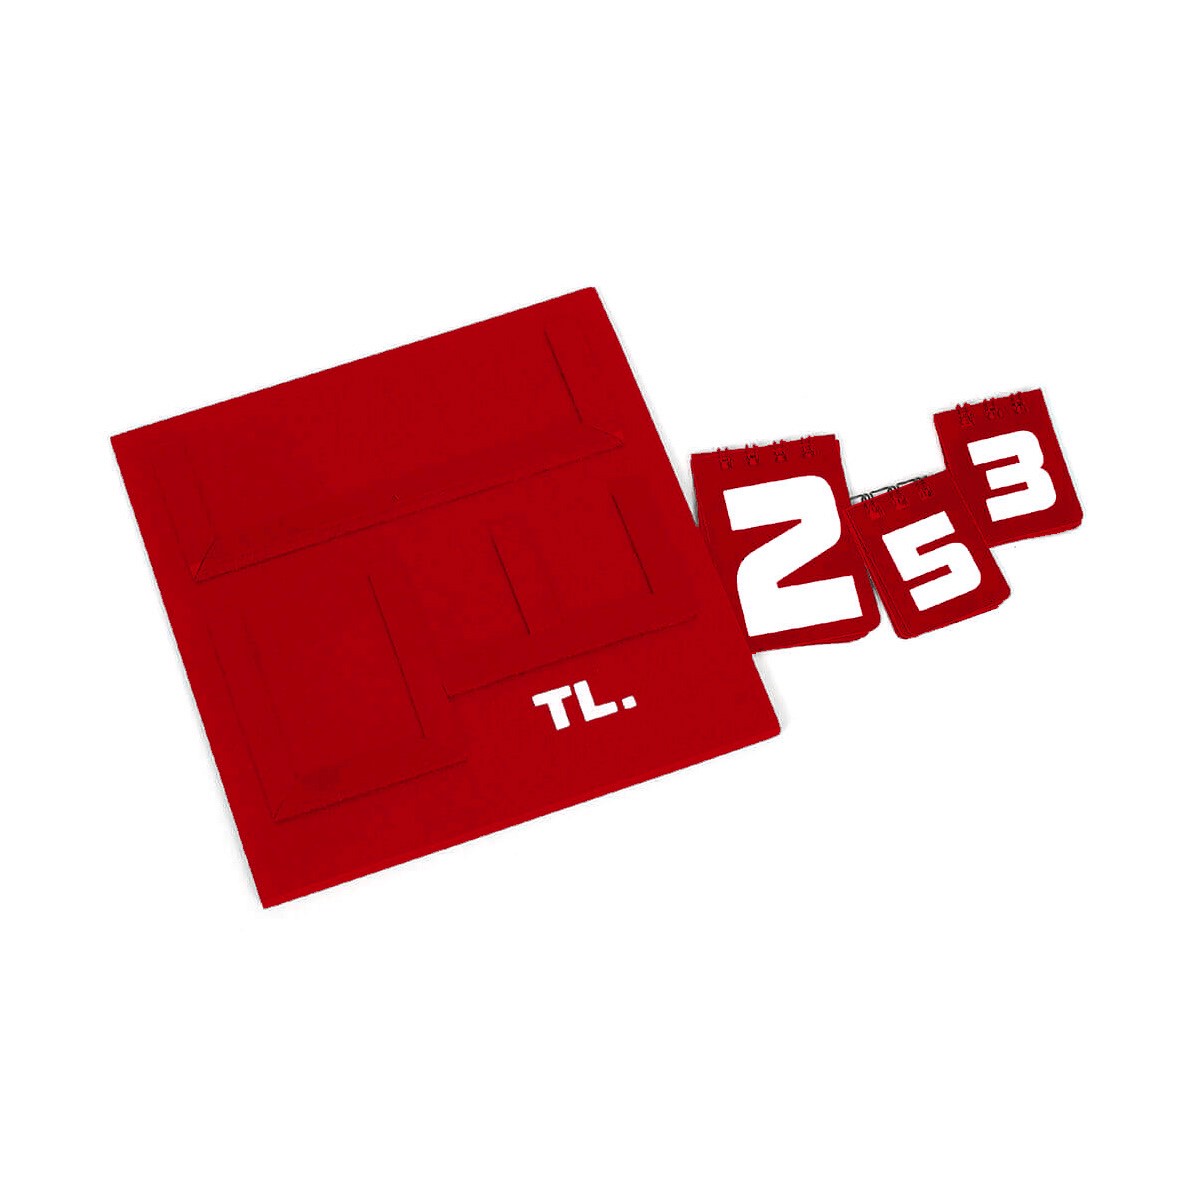 Yazılı Manav Etiketi Mini Tek Taraflı 16x16 cm Kırmızı.jpg (72 KB)